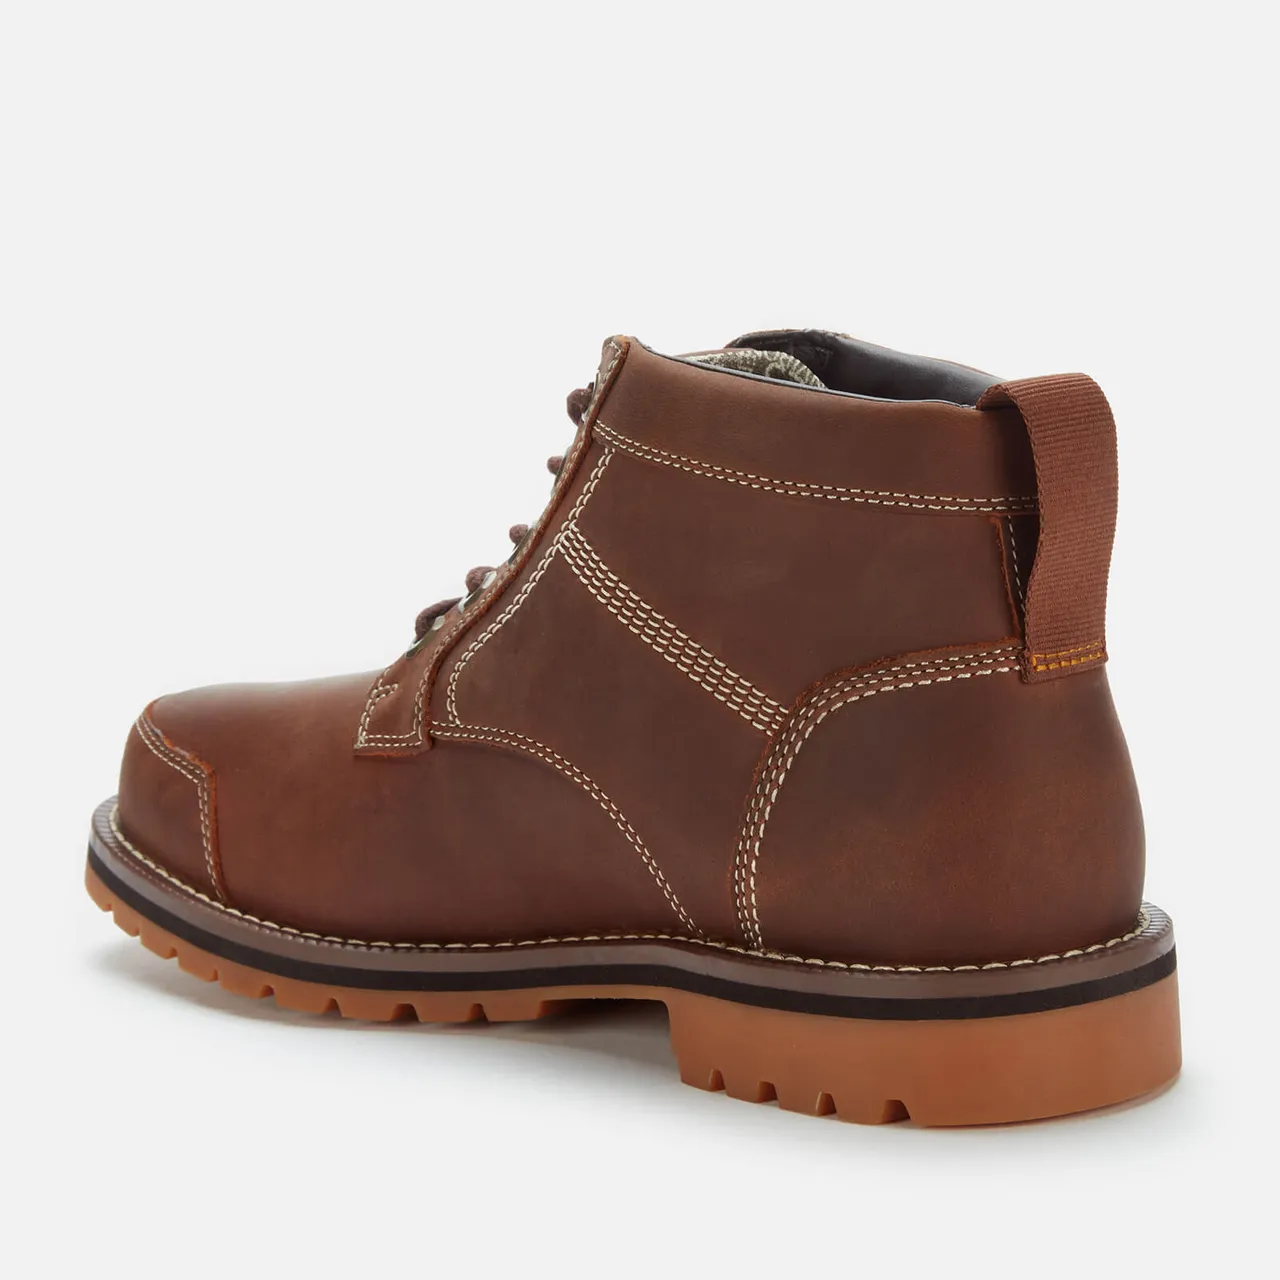 Timberland Men's Larchmont II Leather Chukka Boots - Rust - UK